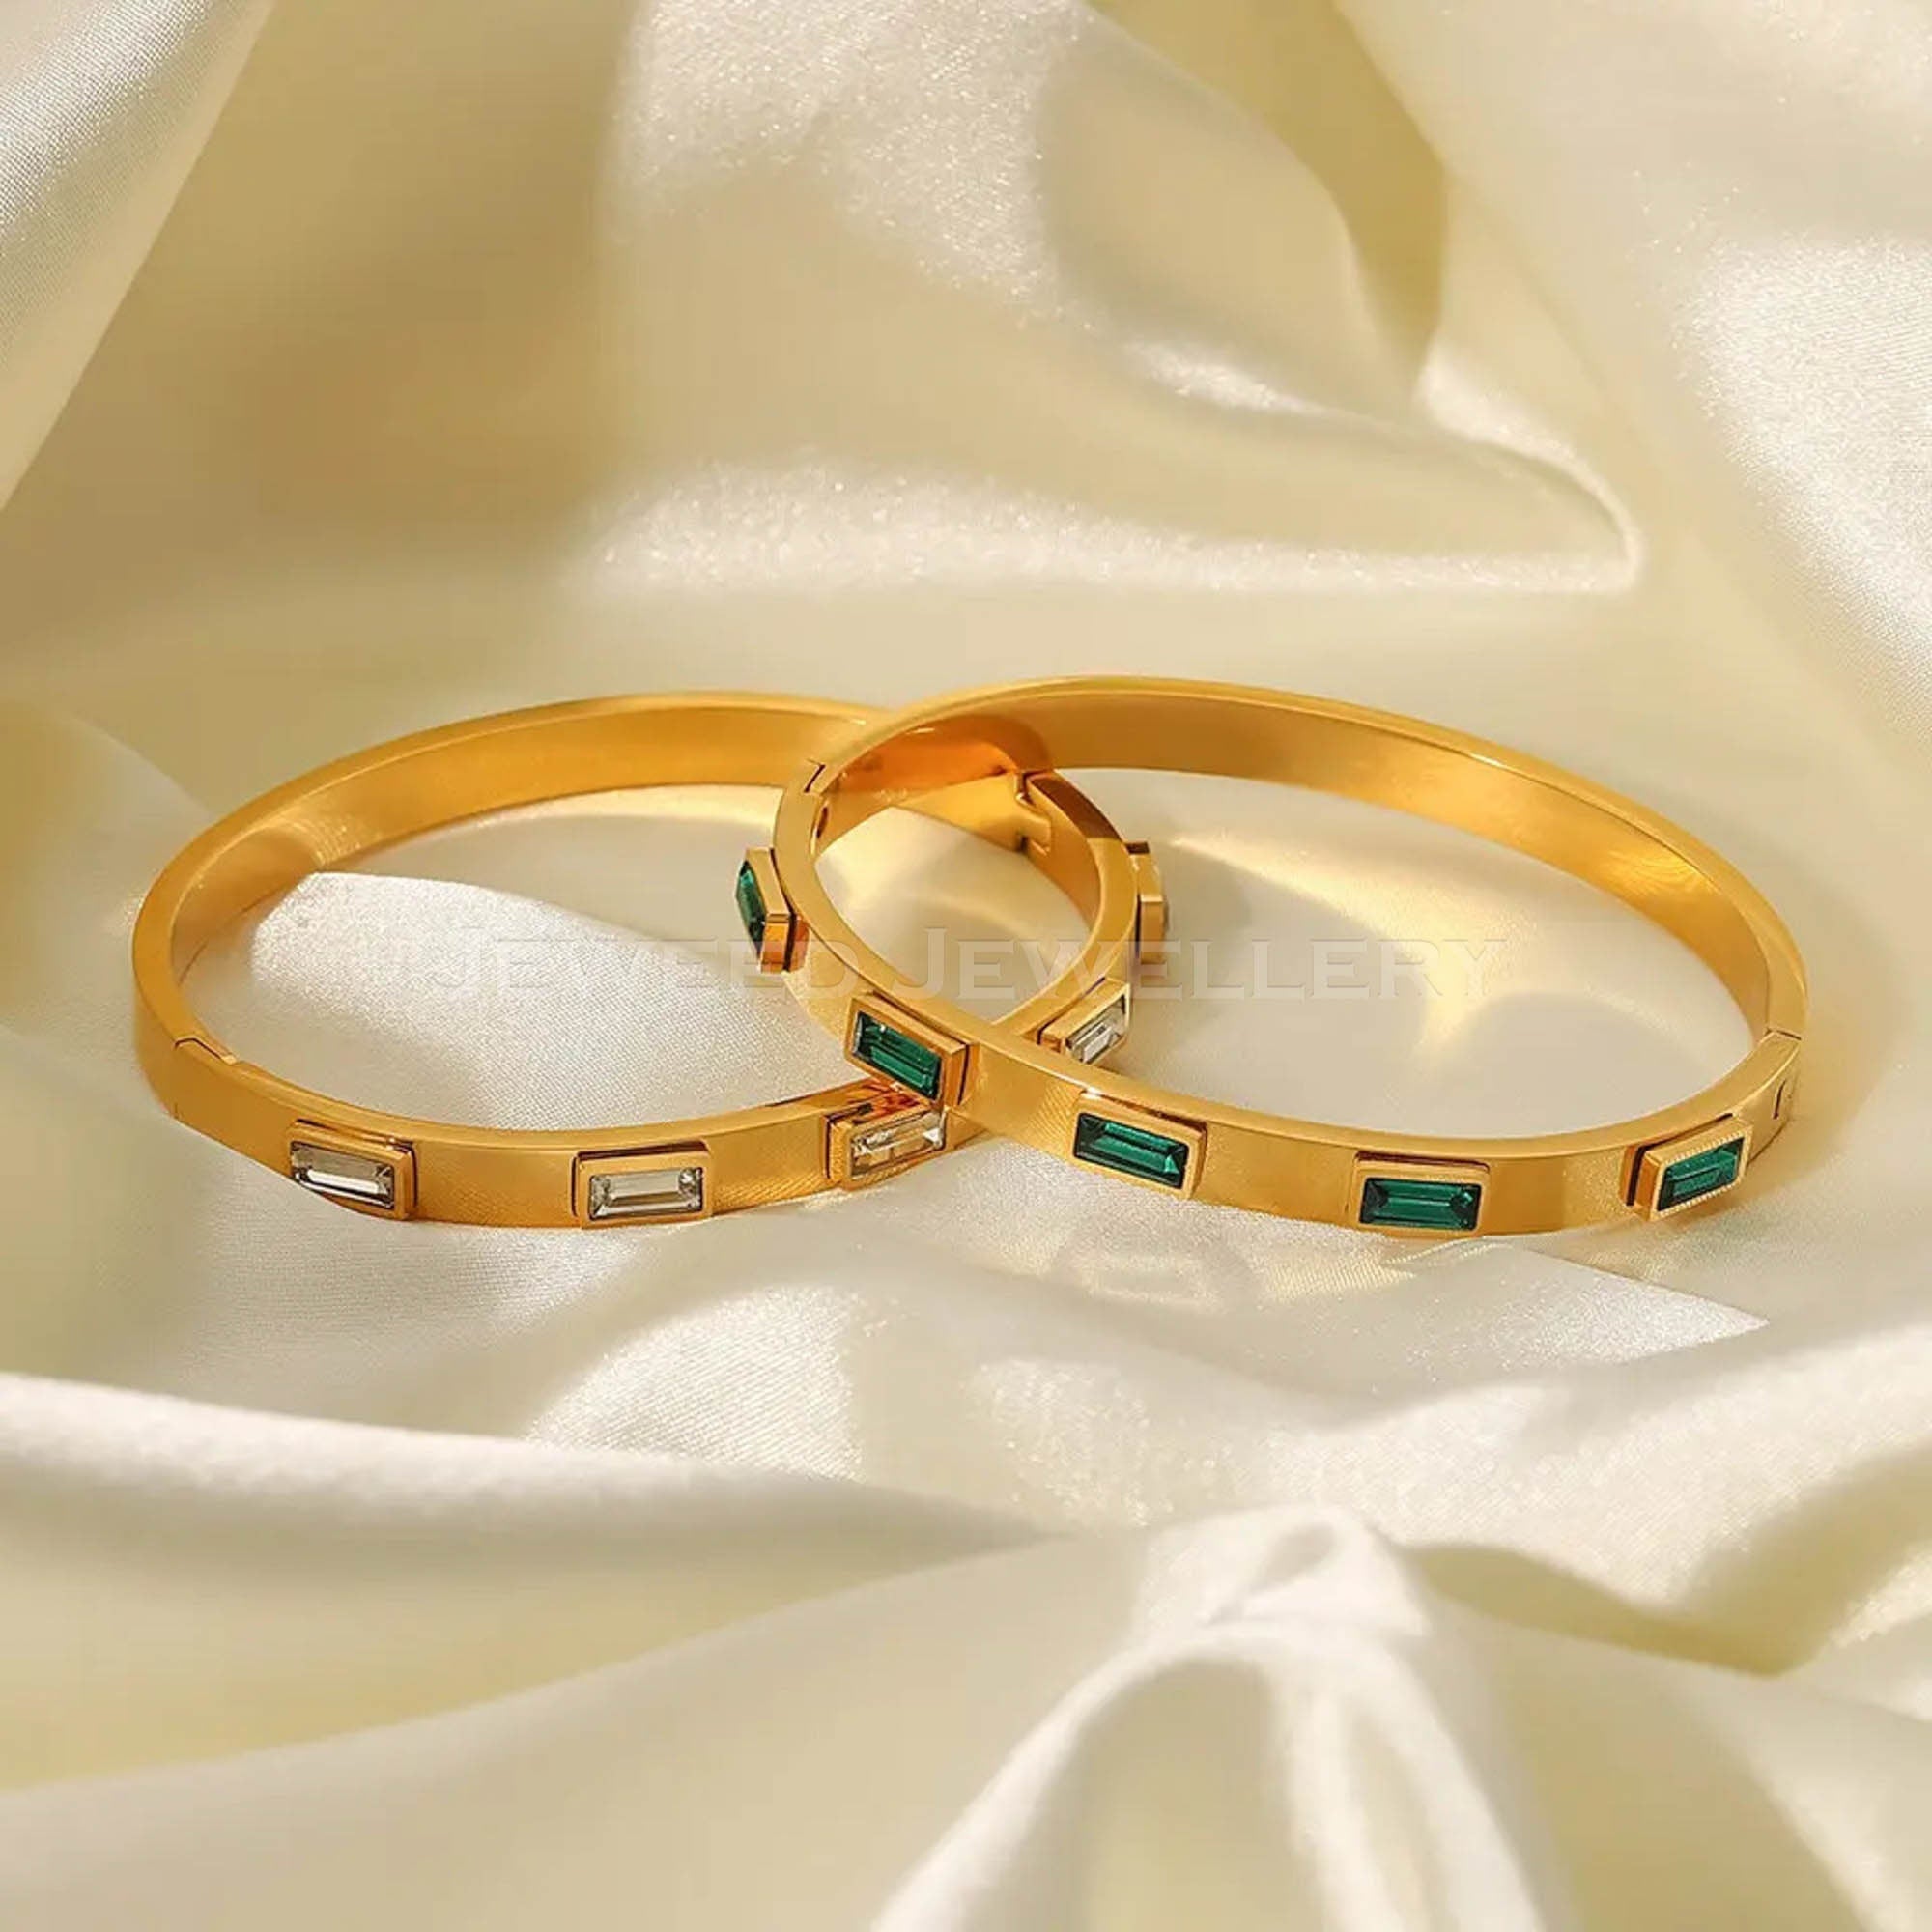 Emerald Bracelet - Green Gem Bangle 18 K Gold Plated with Sparkling Gemstones - Birthstone Jewelry for Her